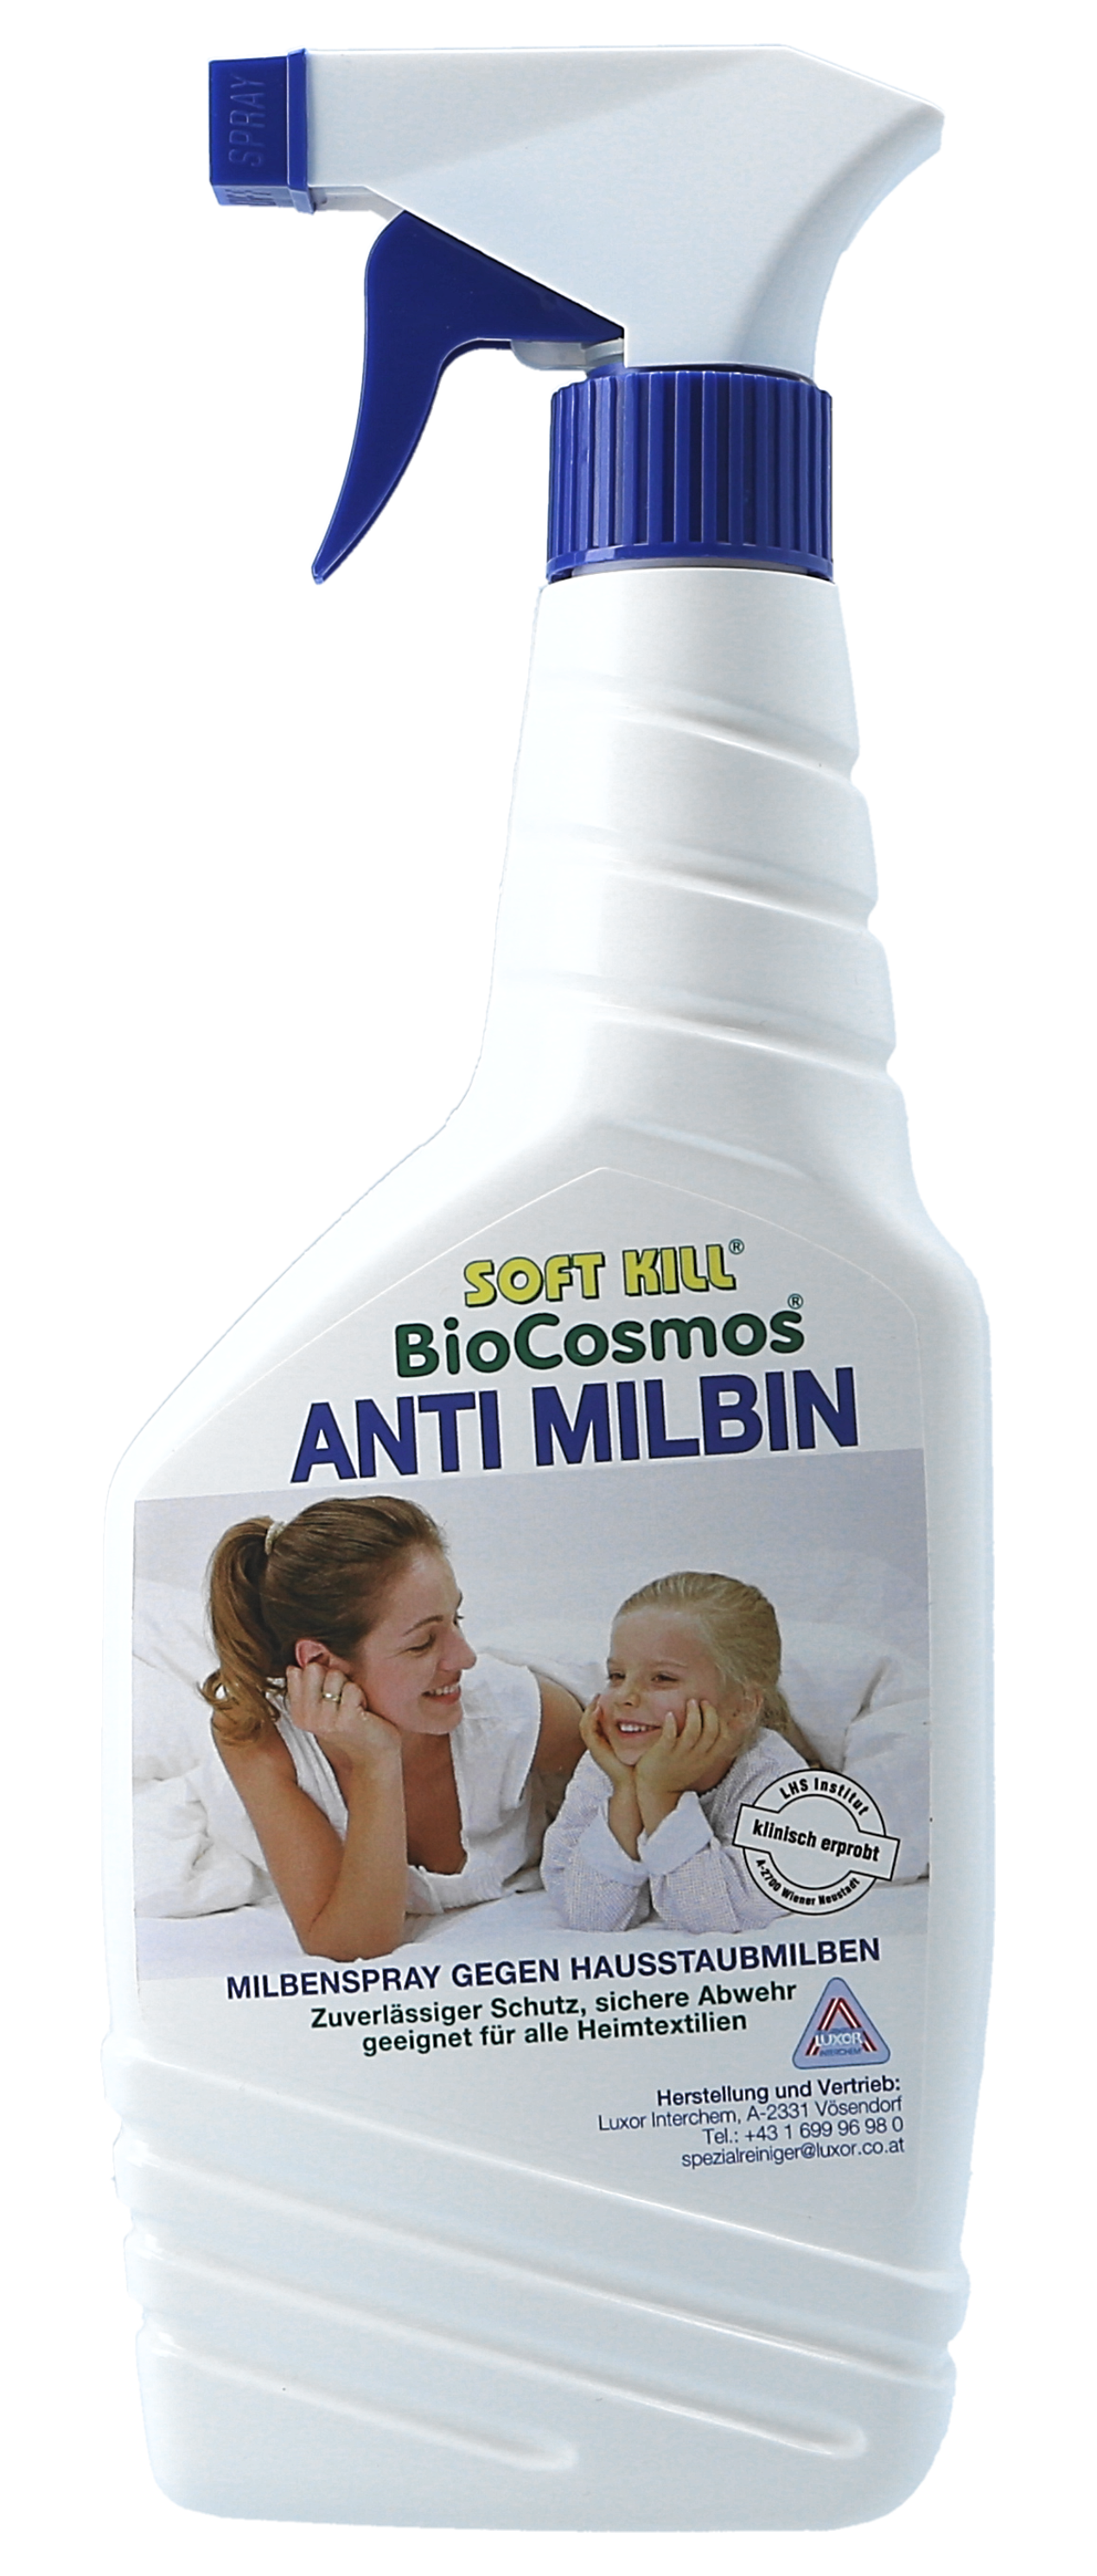 BioCosmos Anti Milbin 500 ml